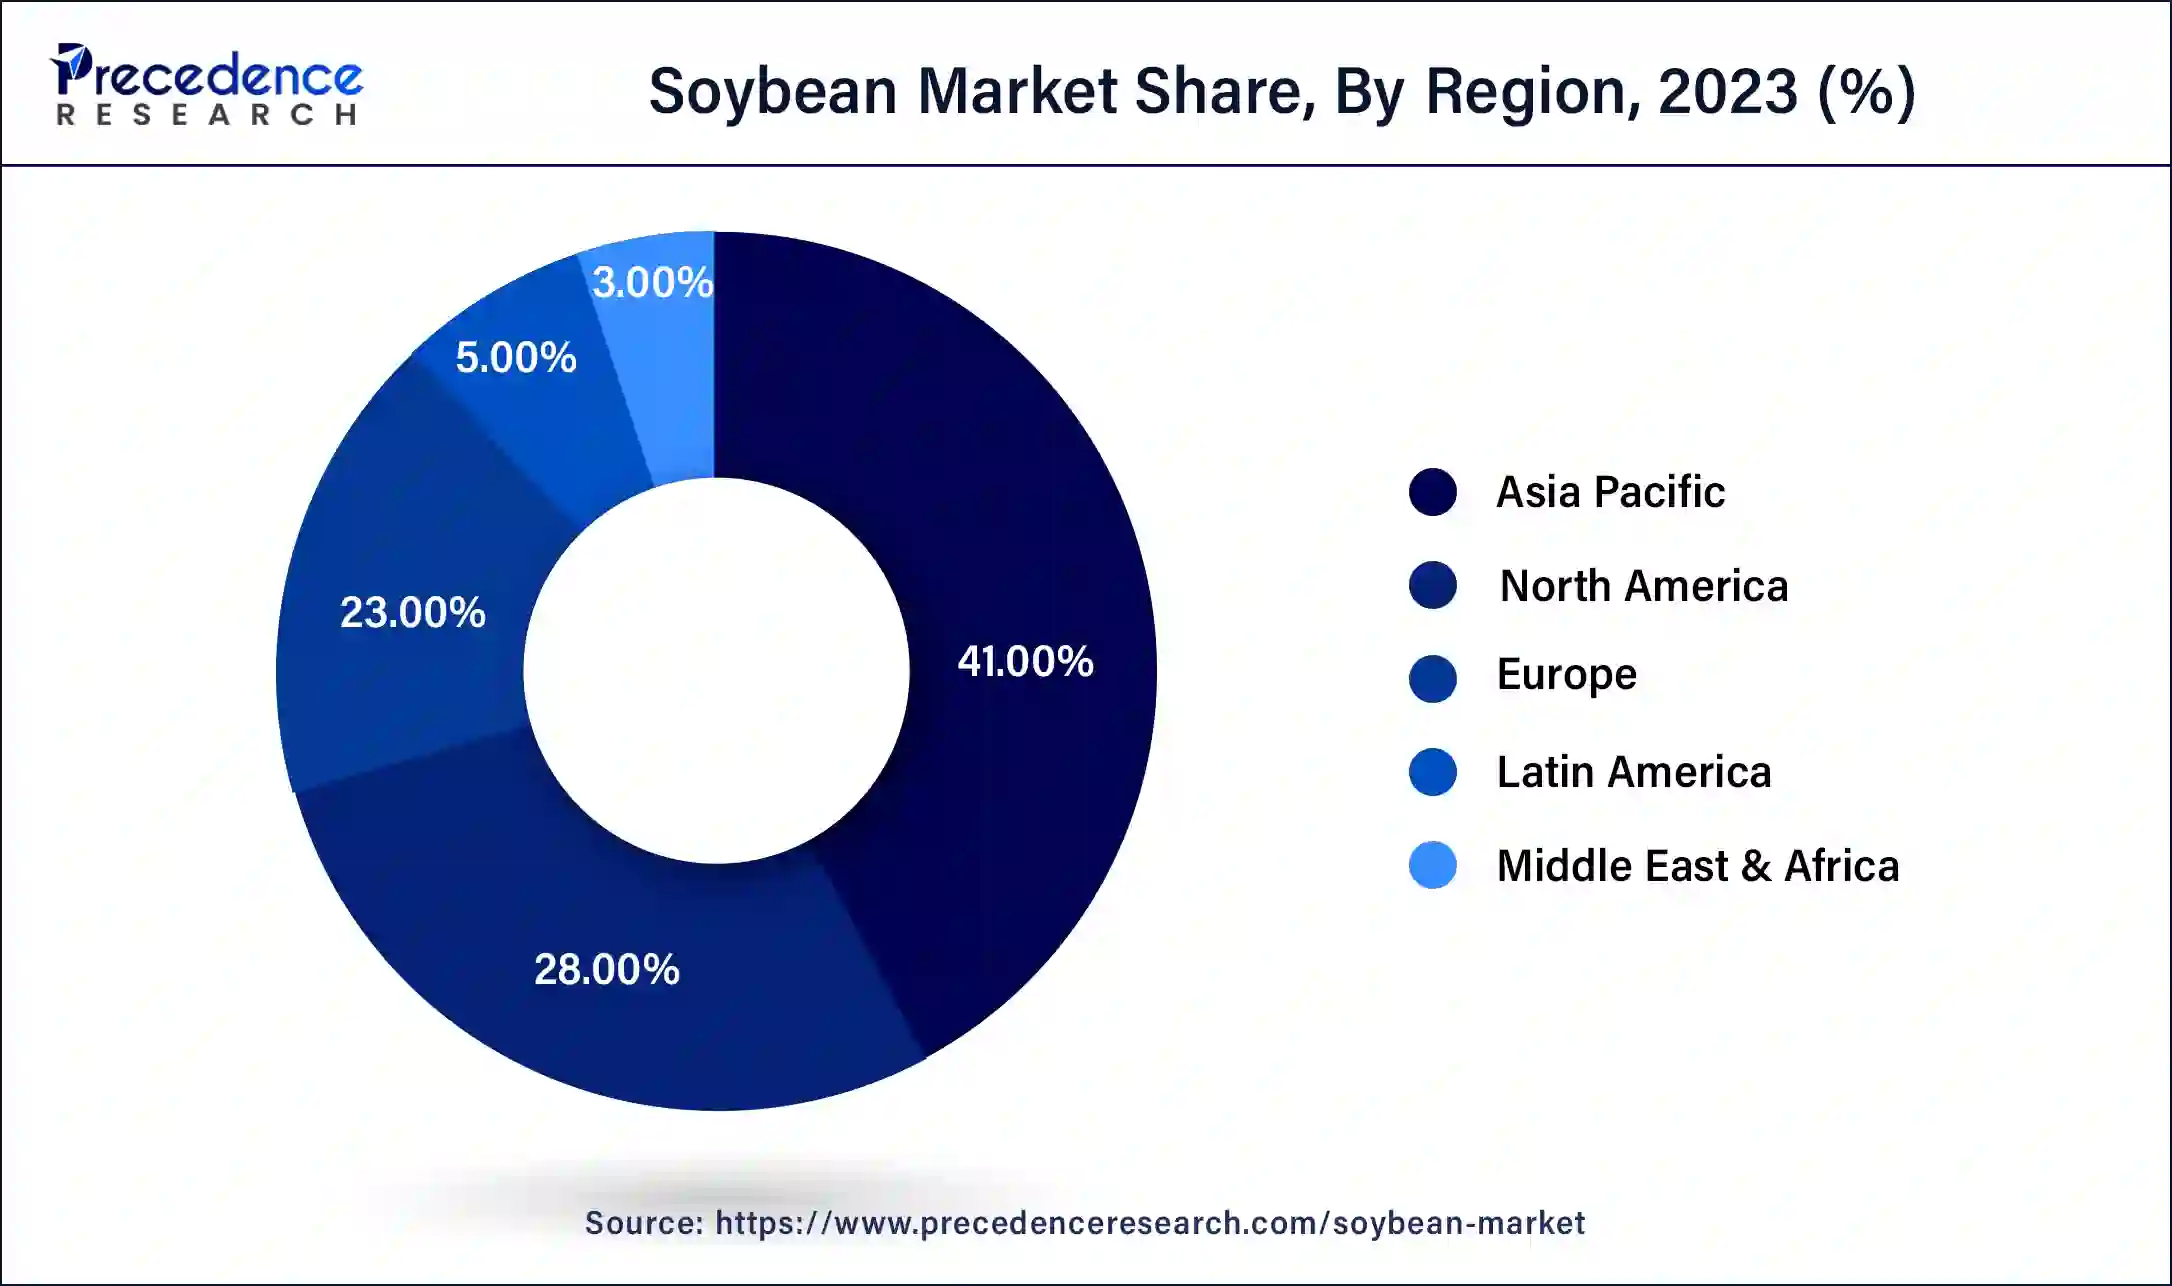 Soyabean Market Share, By Region, 2023 (%)